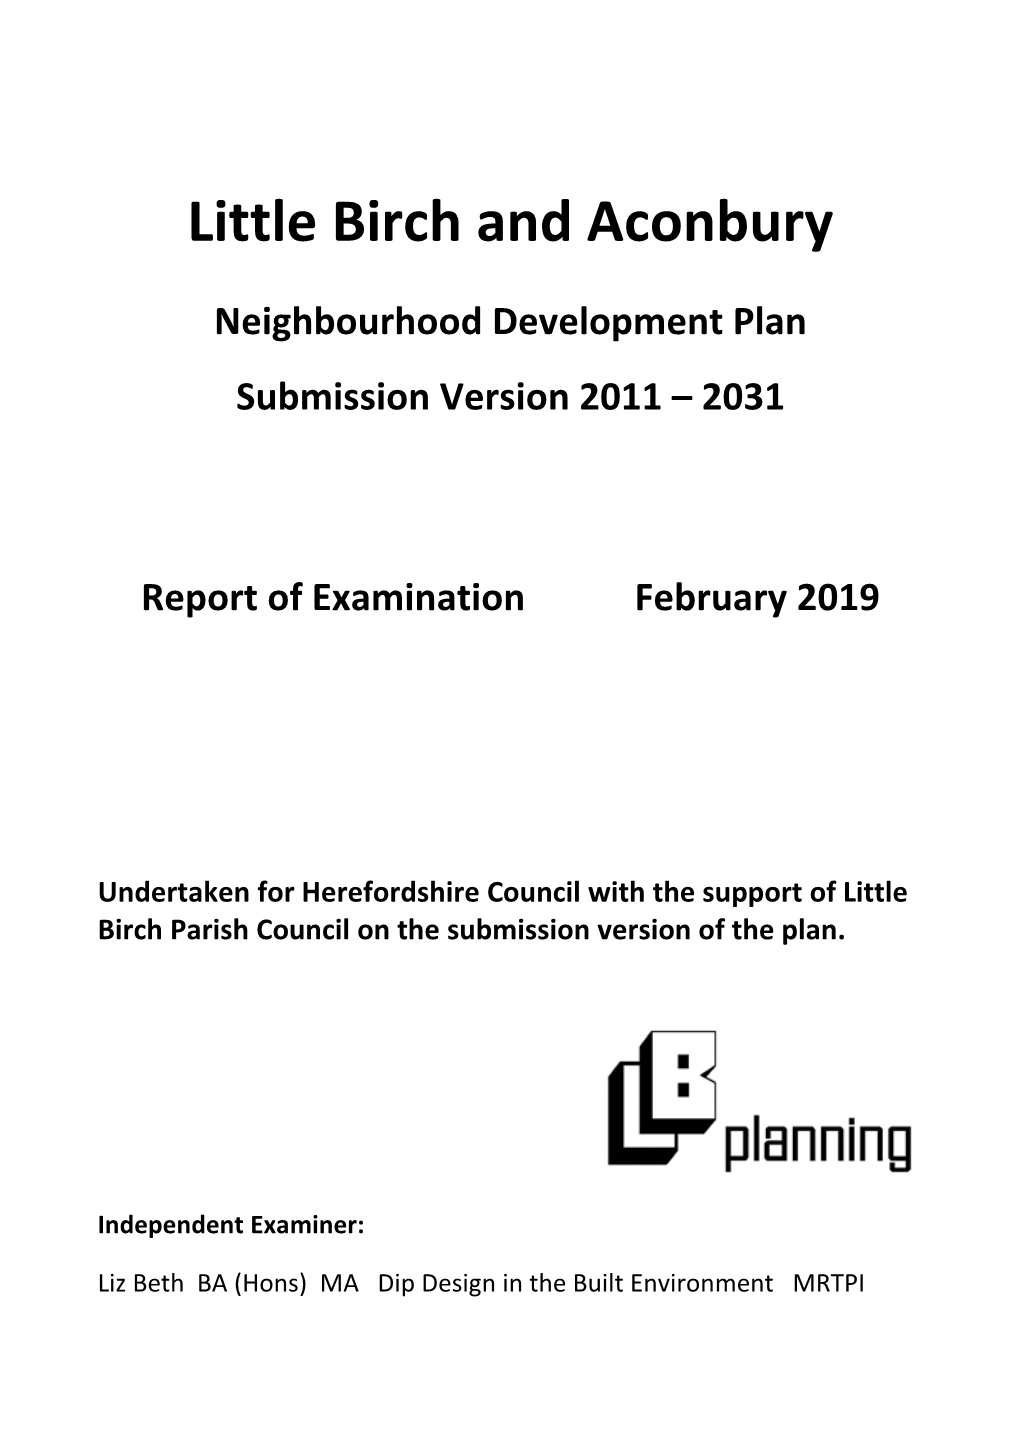 Little Birch and Aconbury Examiner's Report